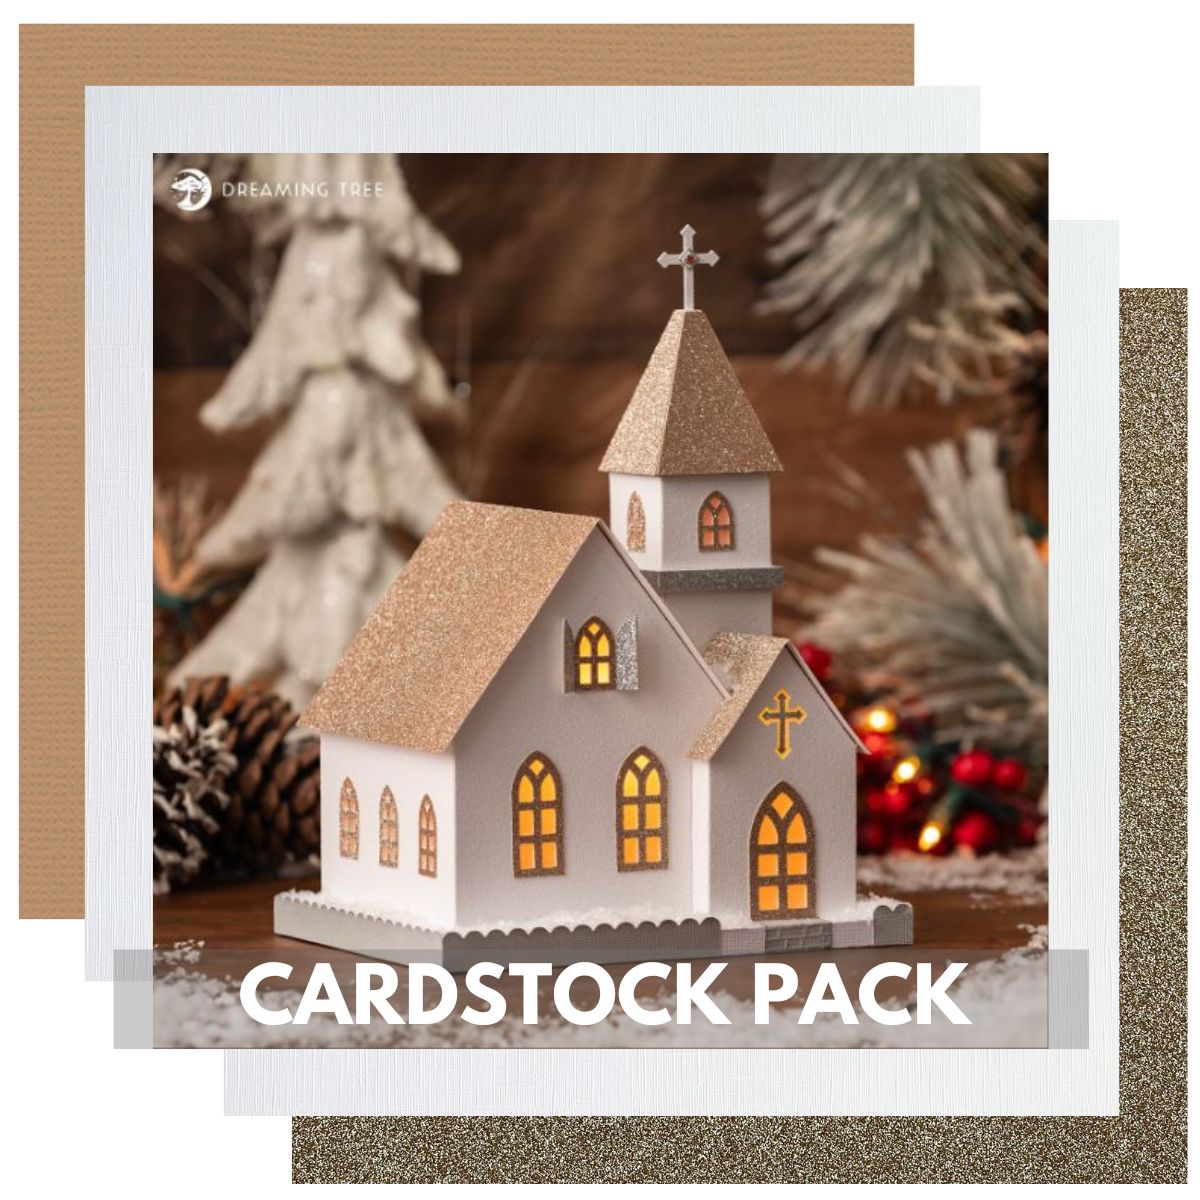 DREAMING TREE CARDINAL CHAPEL CARDSTOCK KIT - 18 Sheets - 12x12 Cardstock Shop